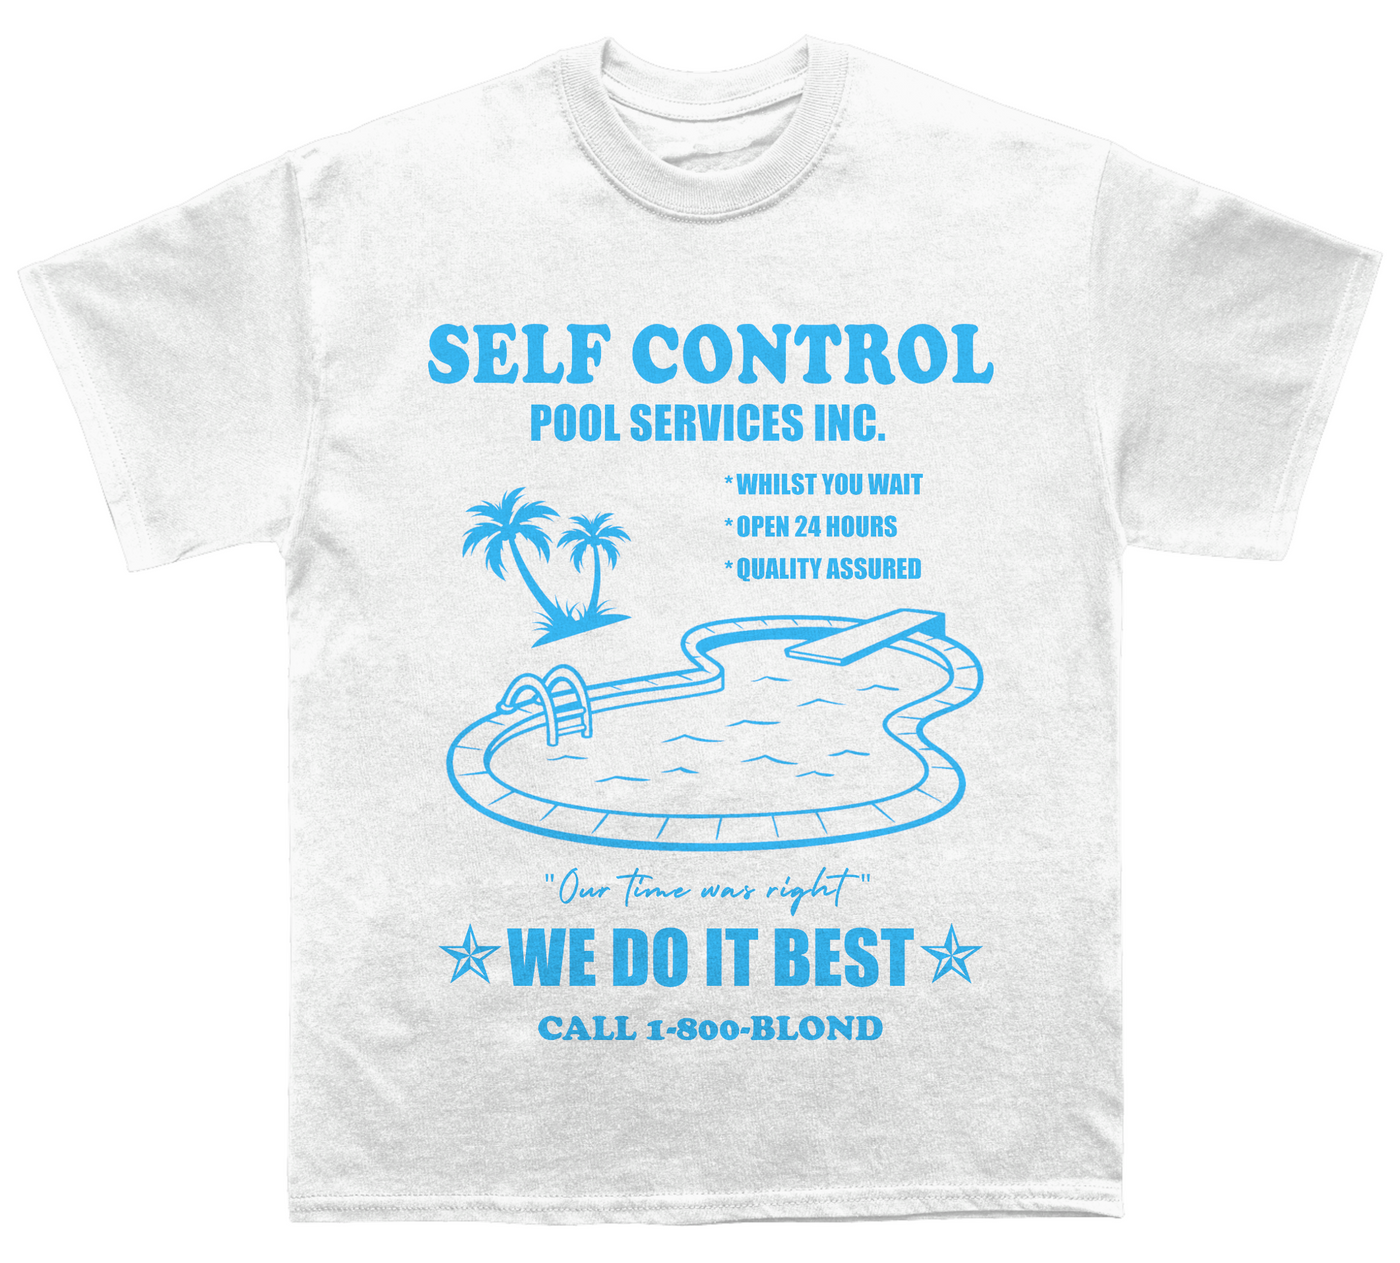 Frank Self Control Services T-shirt